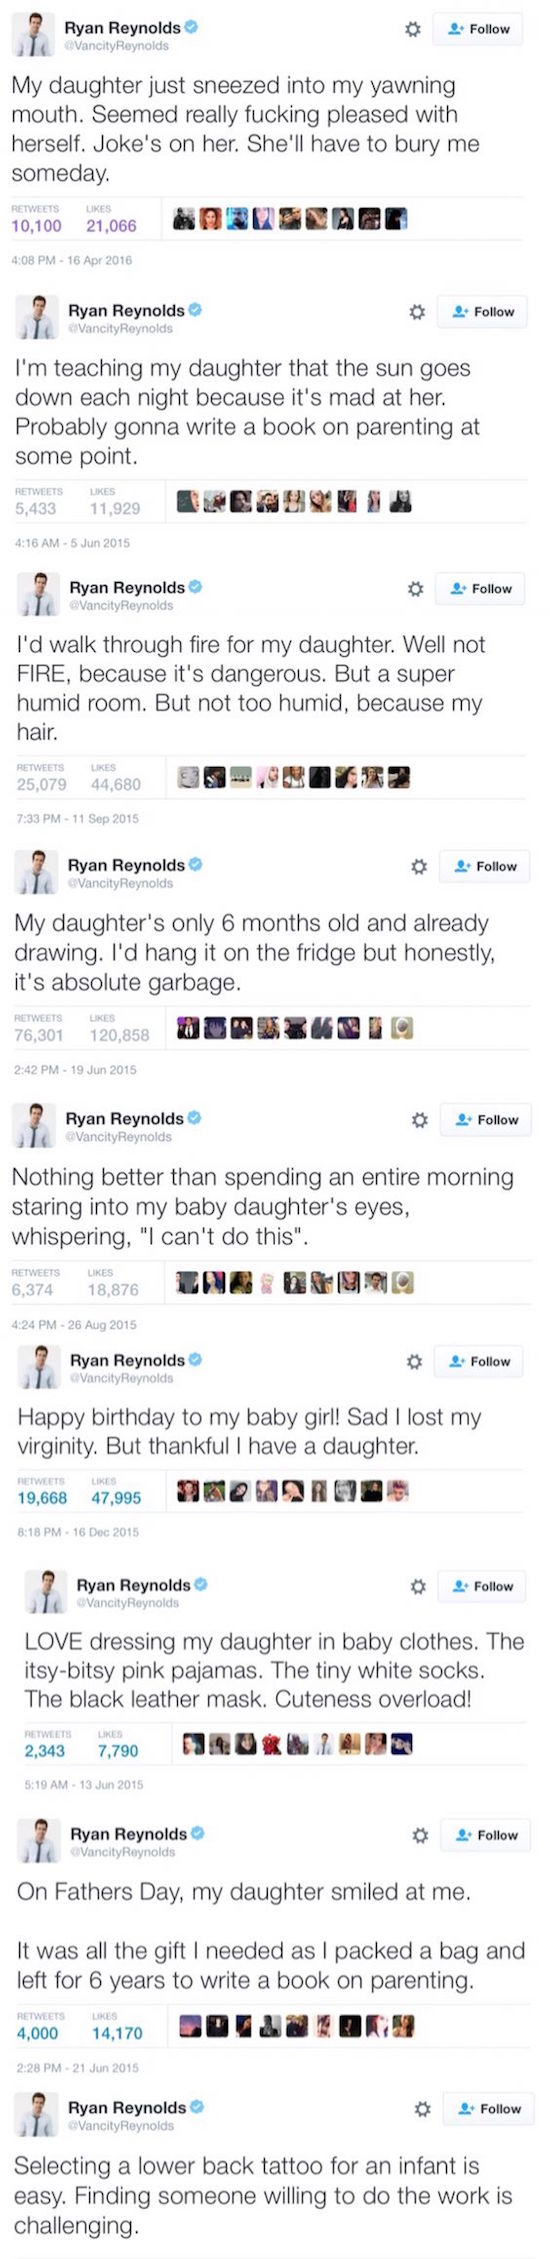 funny tweets by ryan reynolds